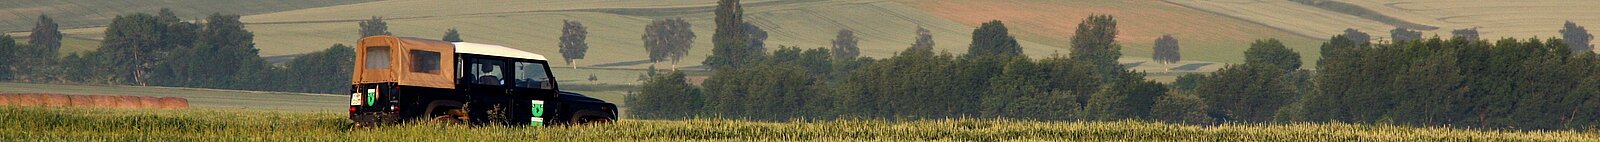 Landrover, crossing a field